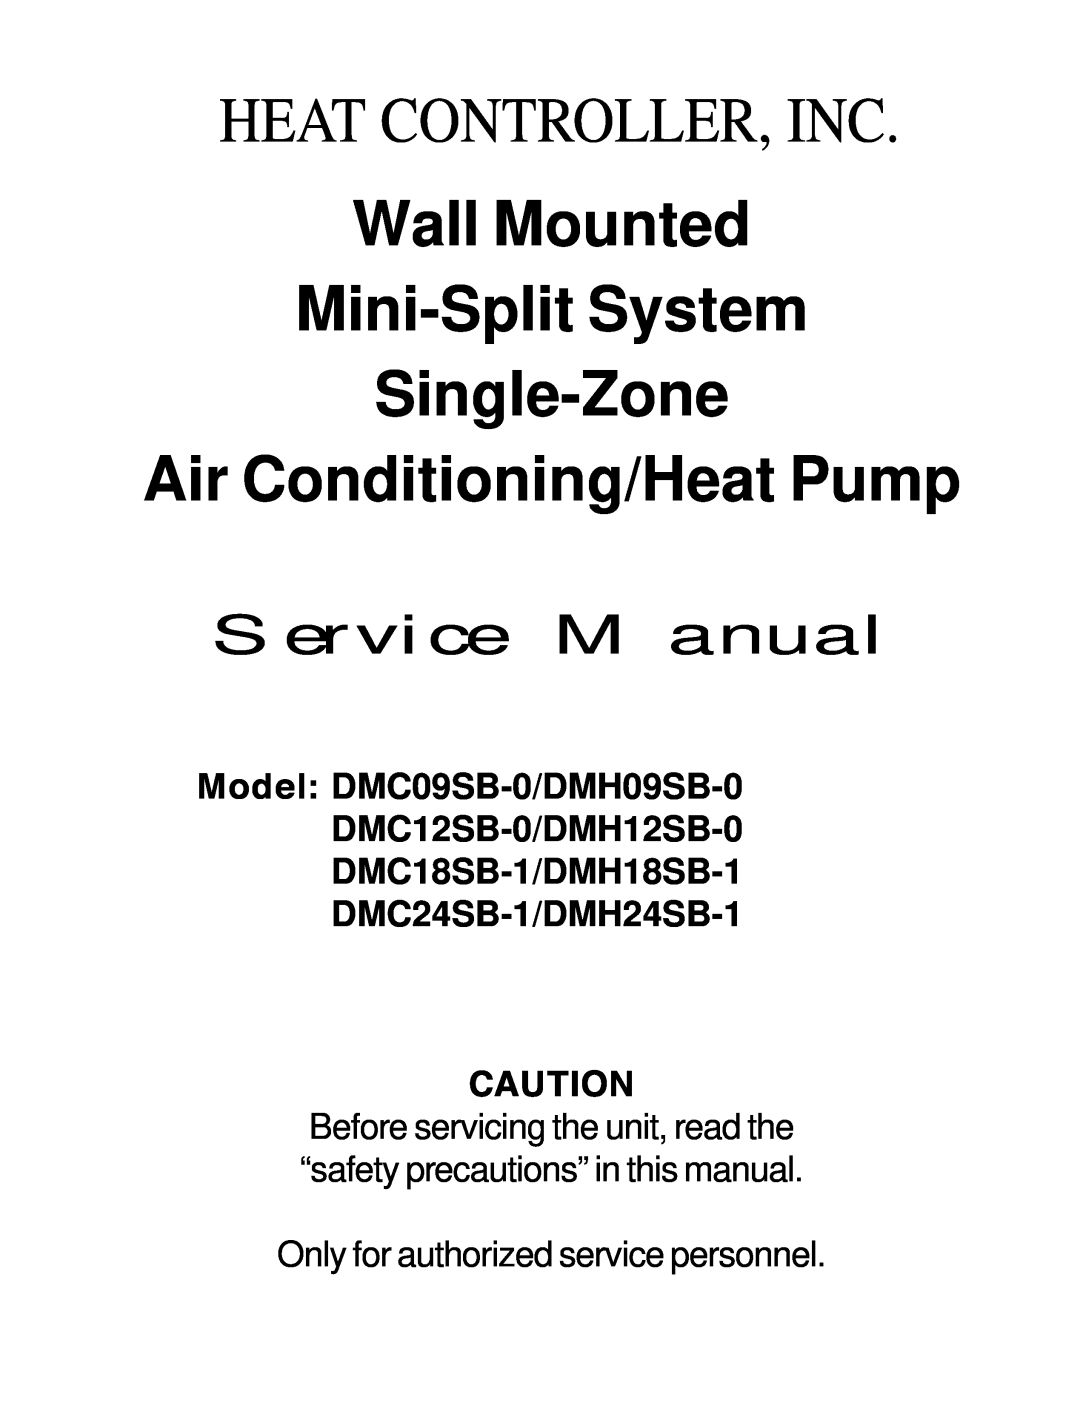 Heat Controller DMC12SB-0, DMC18SB-1 service manual Heat Controller, Inc, Wall Mounted Mini-SplitSystem Single-Zone 